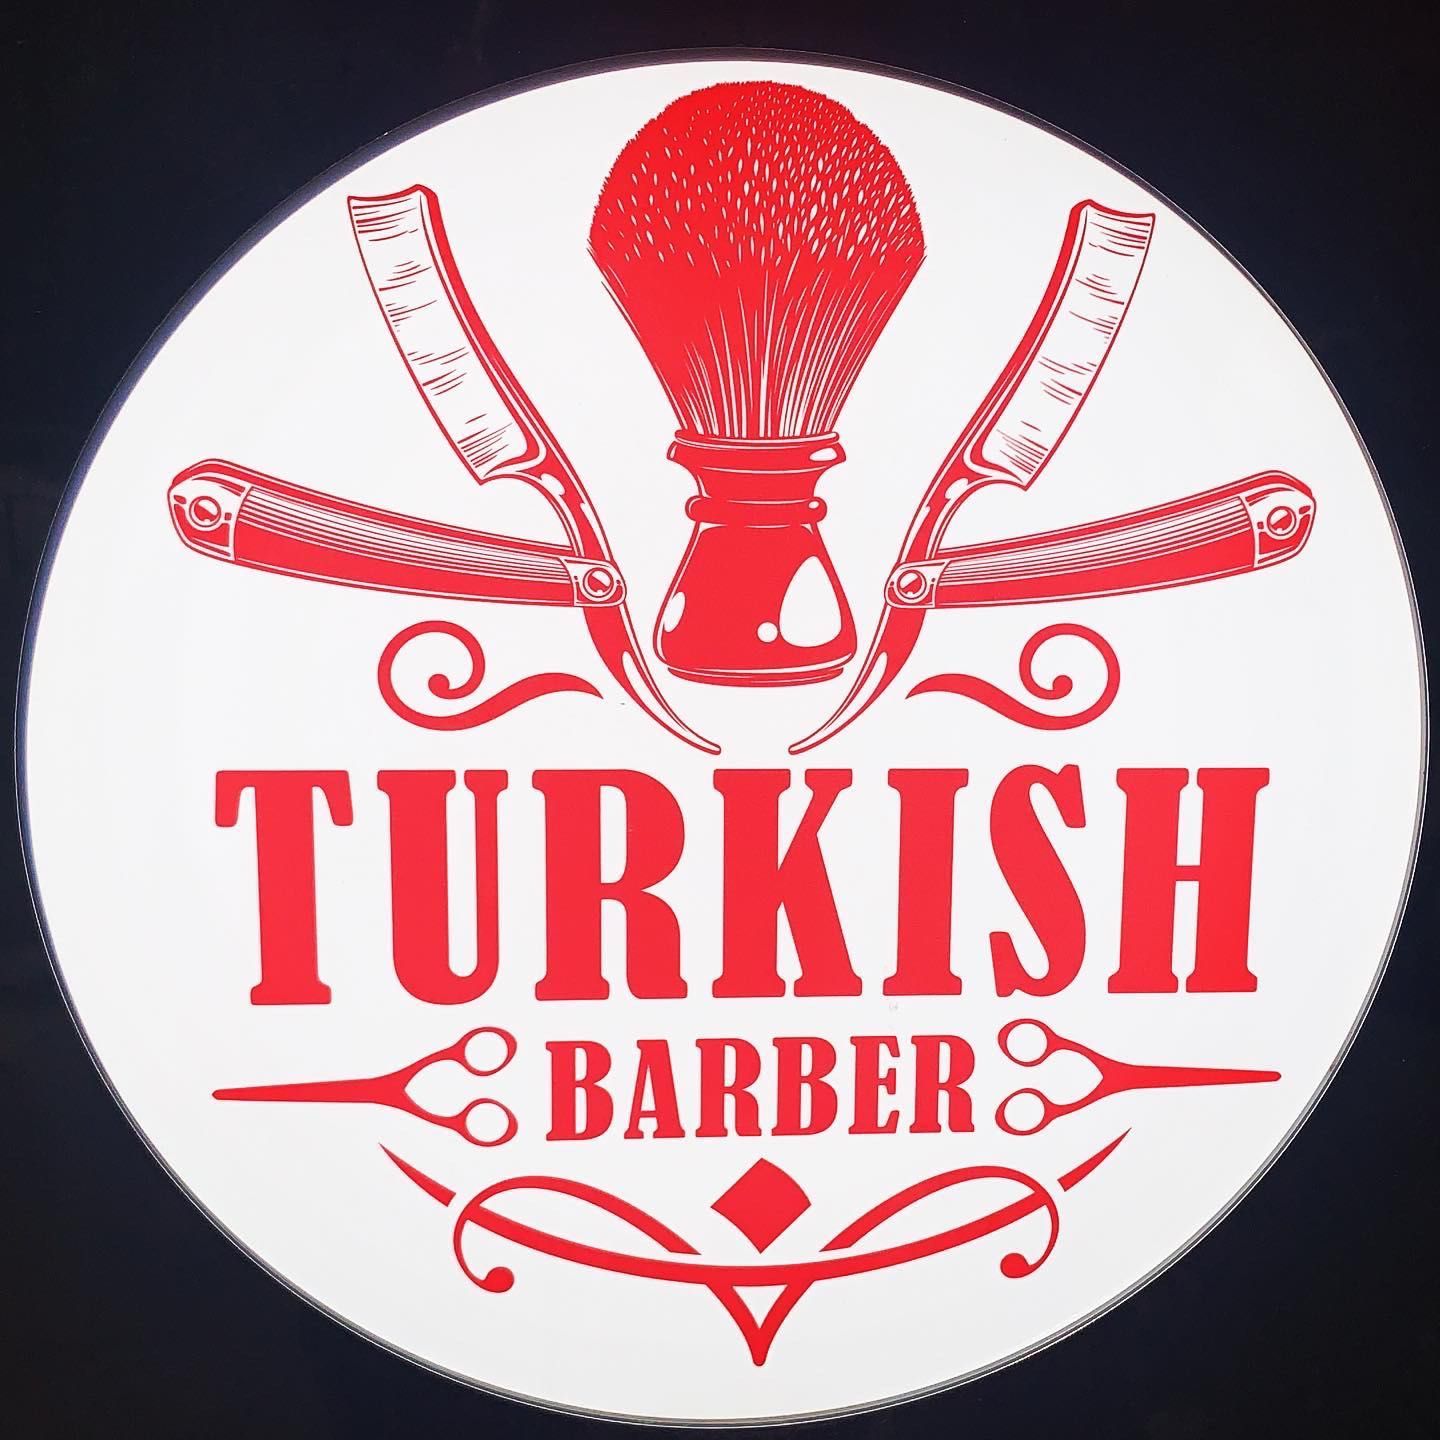 Turkish Barber, 14A ELDON TERRACE, LS2 9AB, Leeds